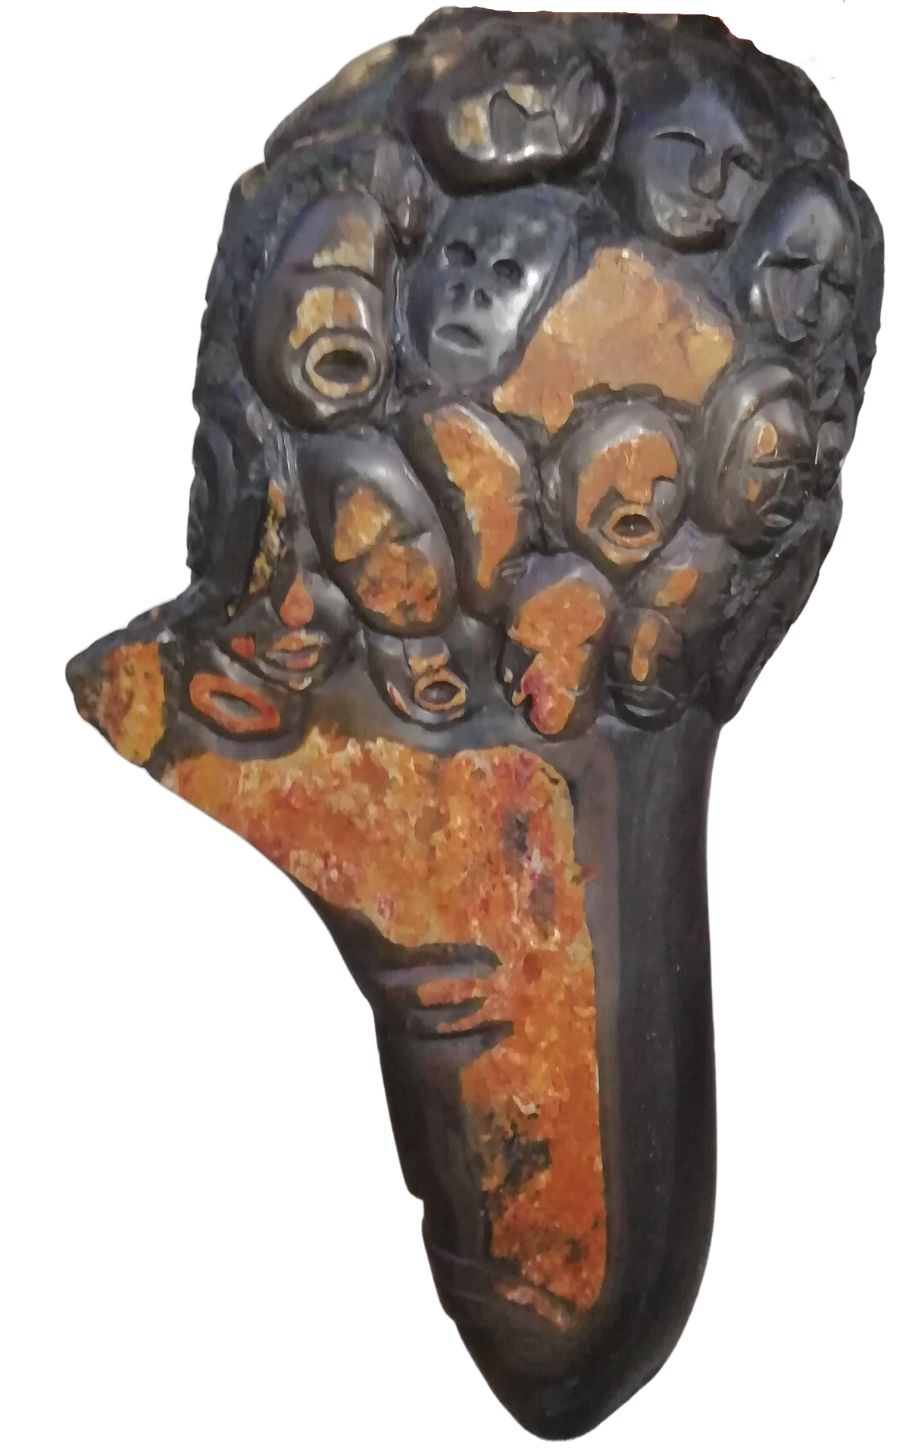 Africa Yachema (Africa Cries) Saviour Mukomberanwa Sculpture JULIE MILLER AFRICAN CONTEMPORARY